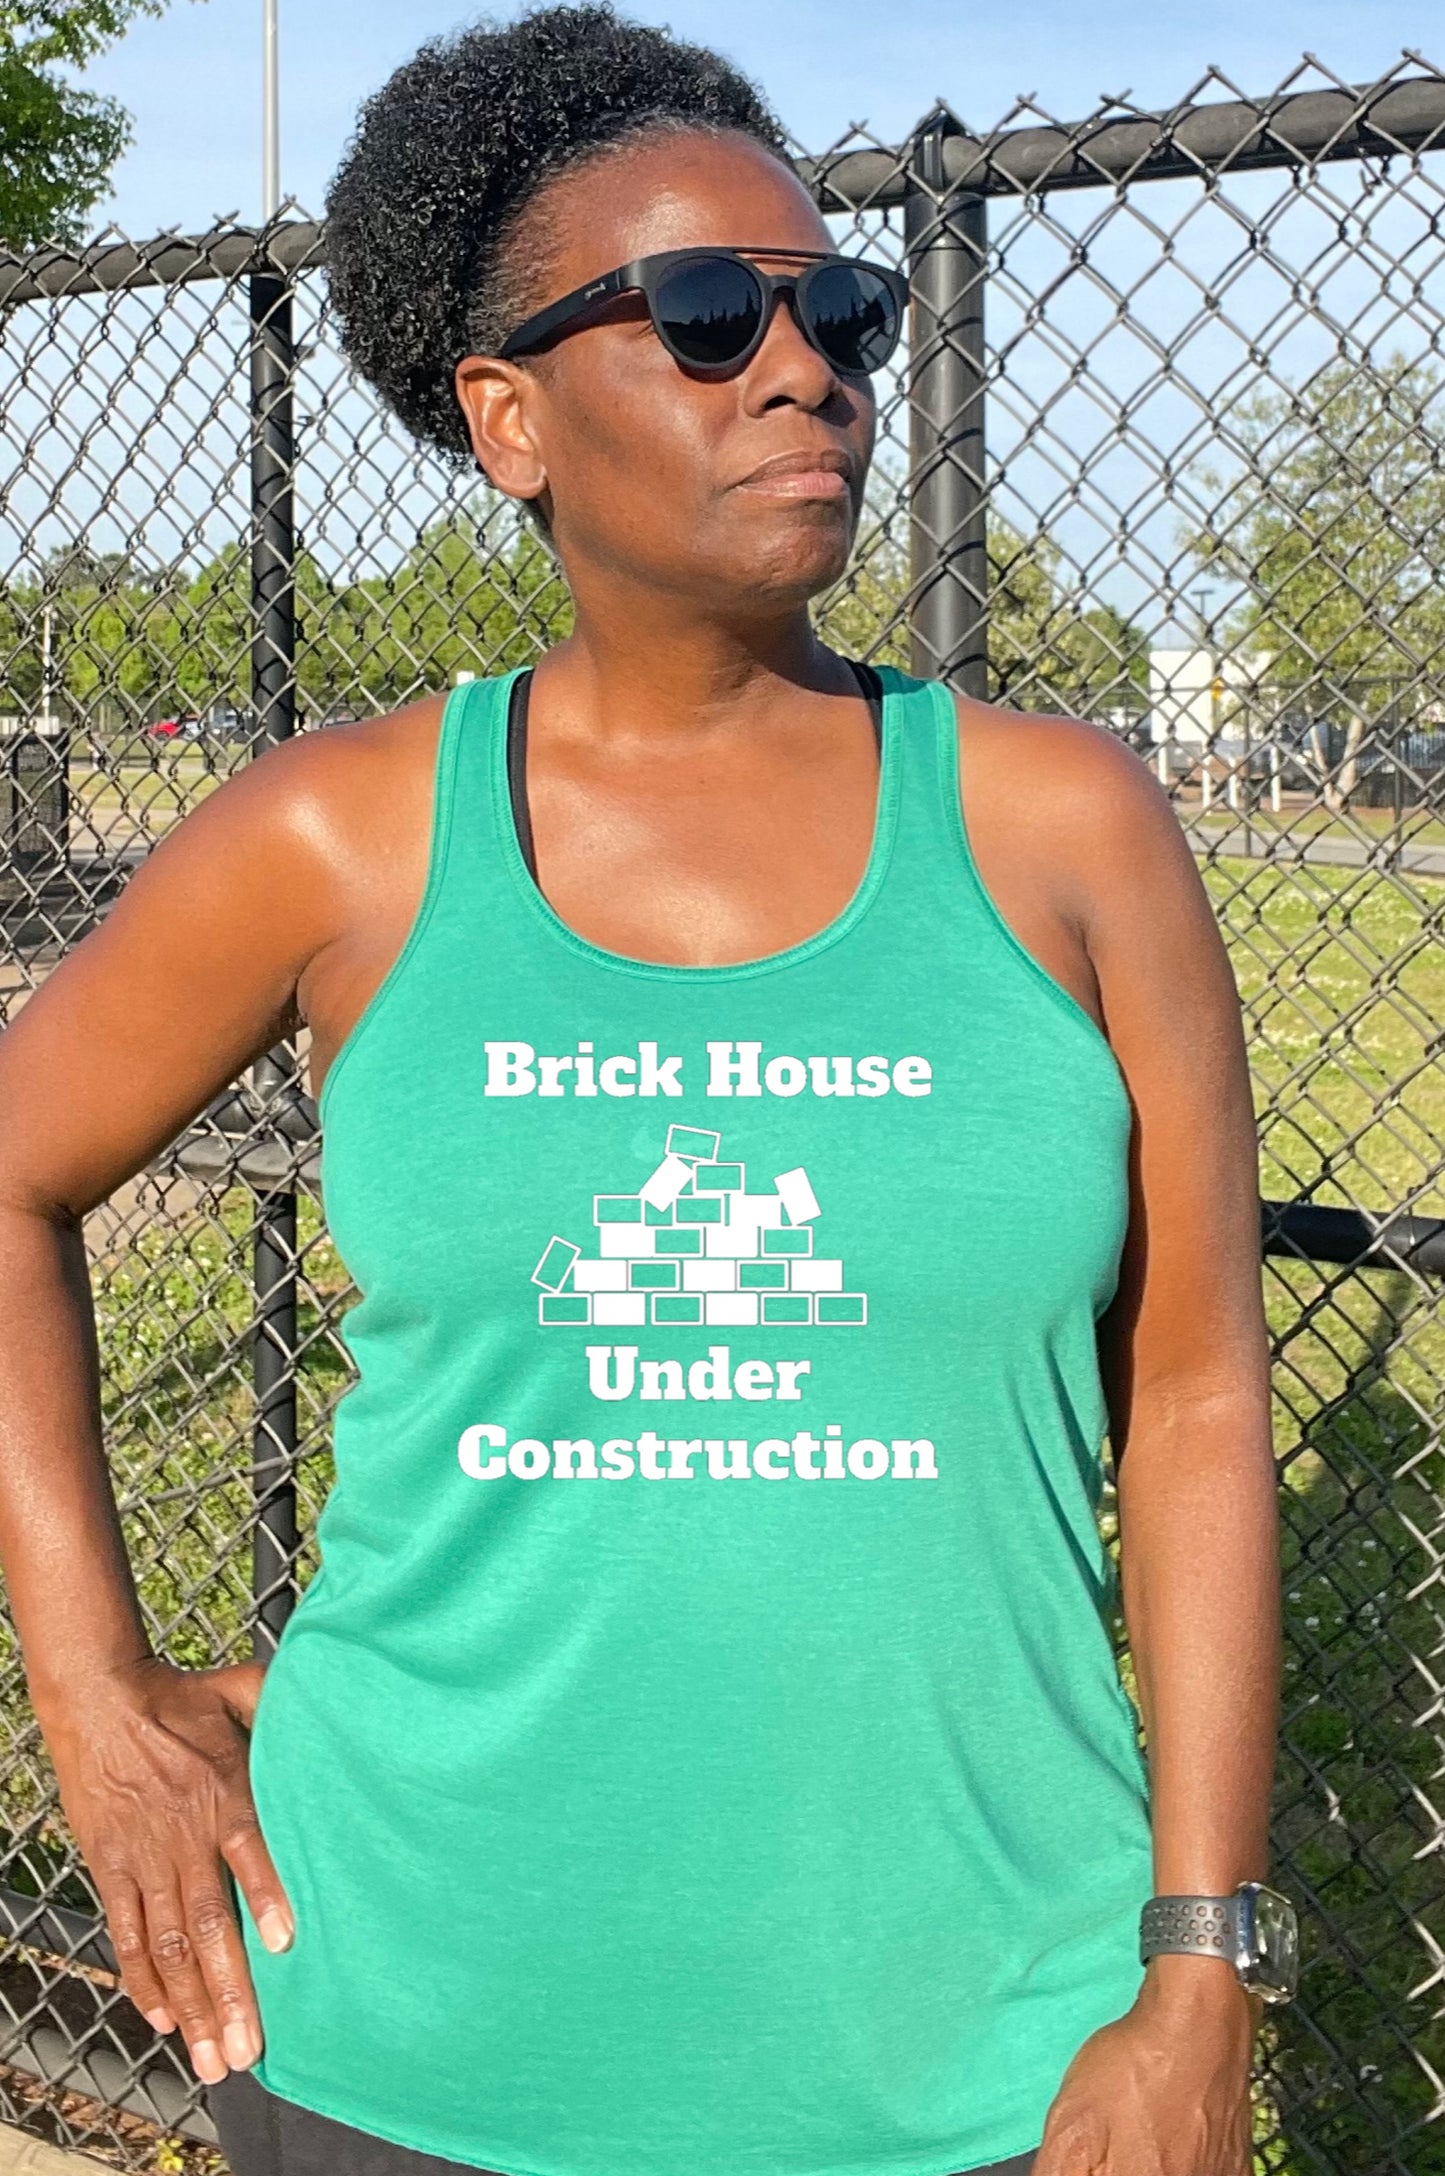 Brick house Racerback Tank Top